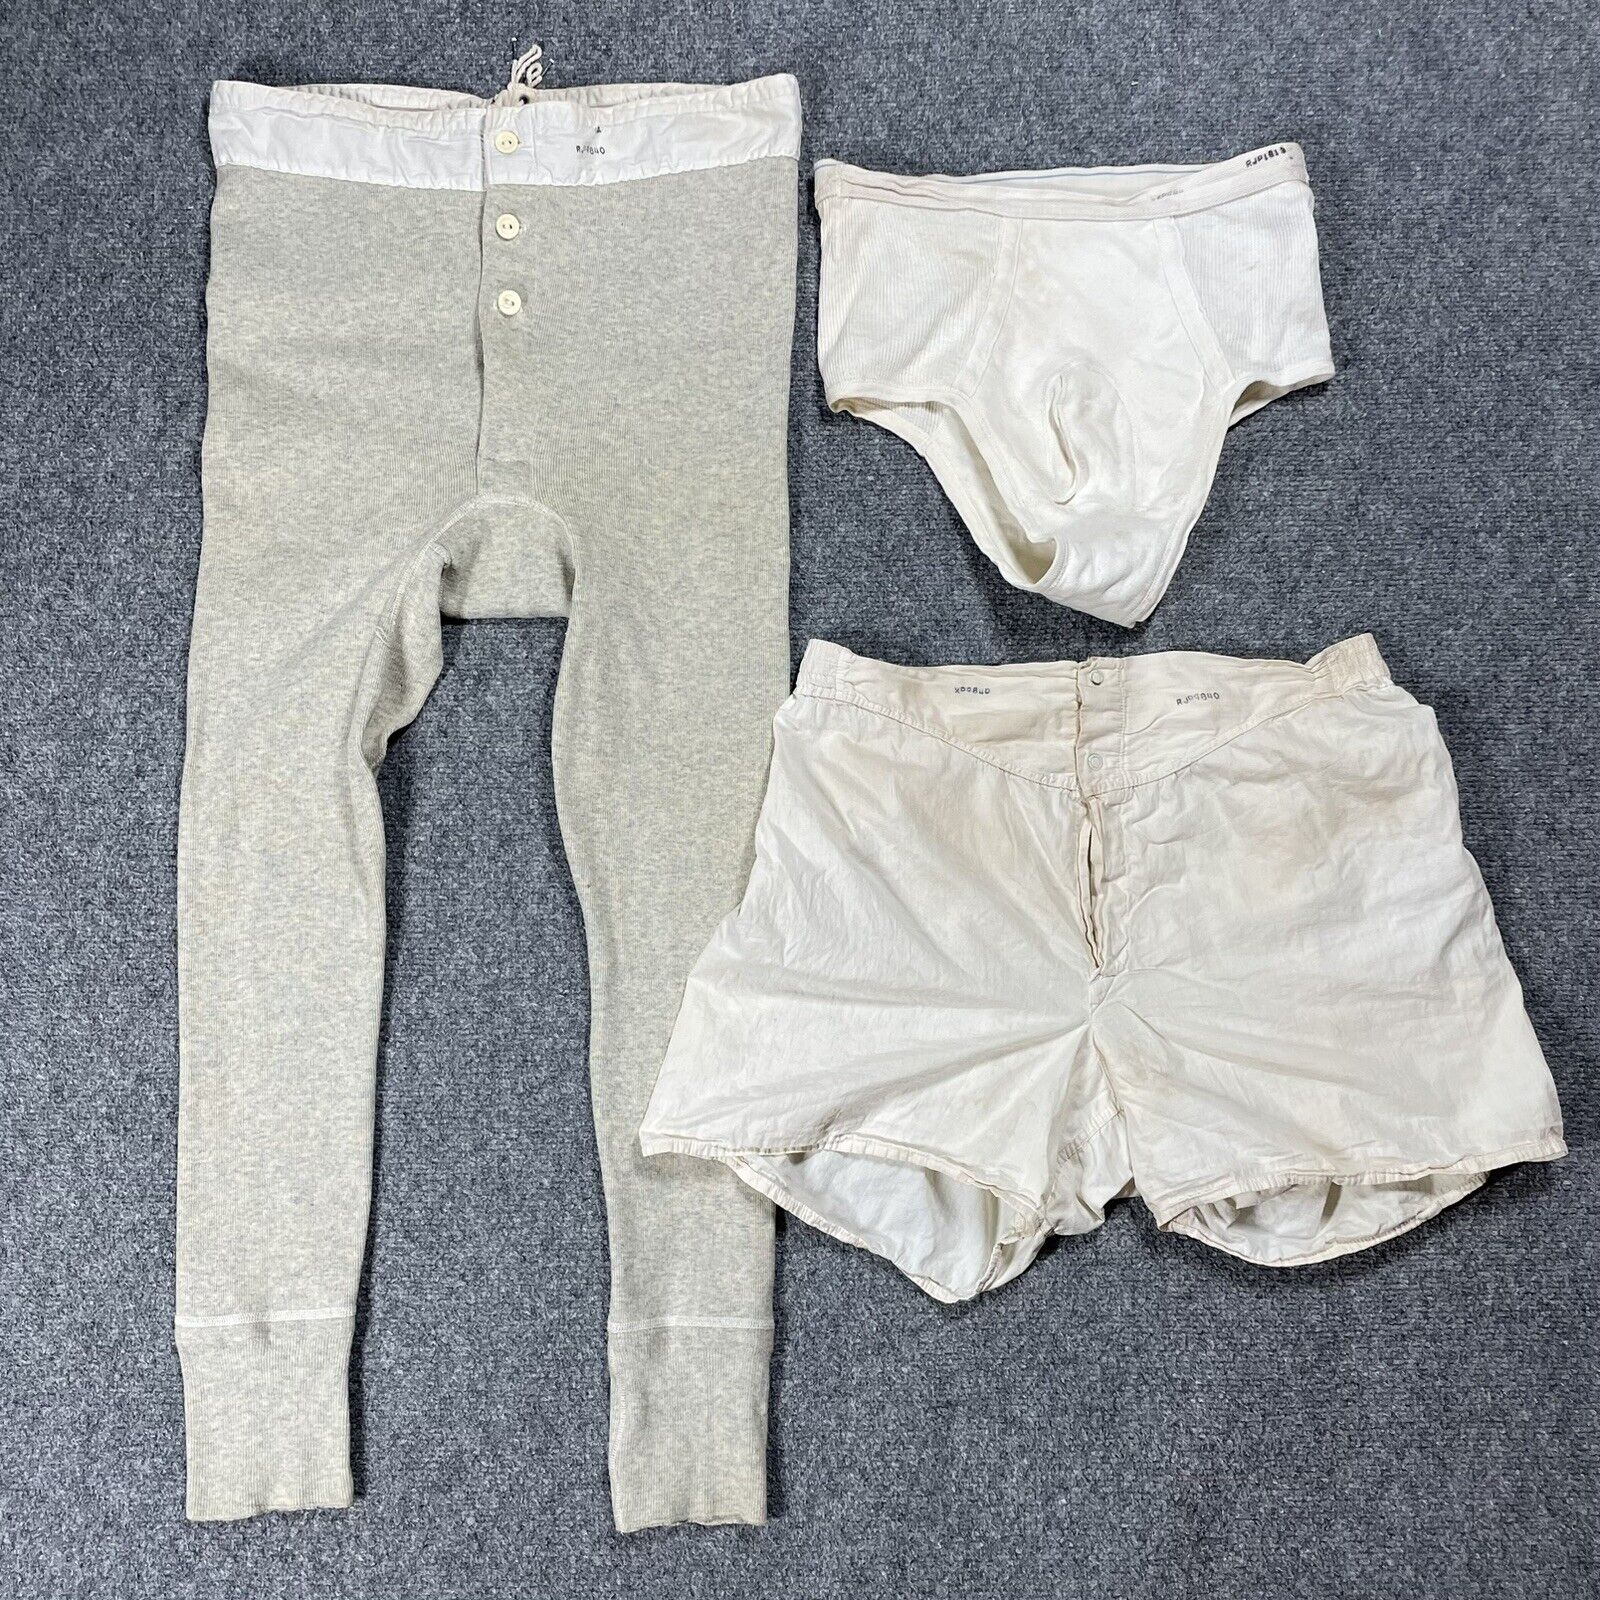 VINTAGE 1940s WWII Underwear Lot Boxer Shorts Cotton Men Tighty Whities Briefs